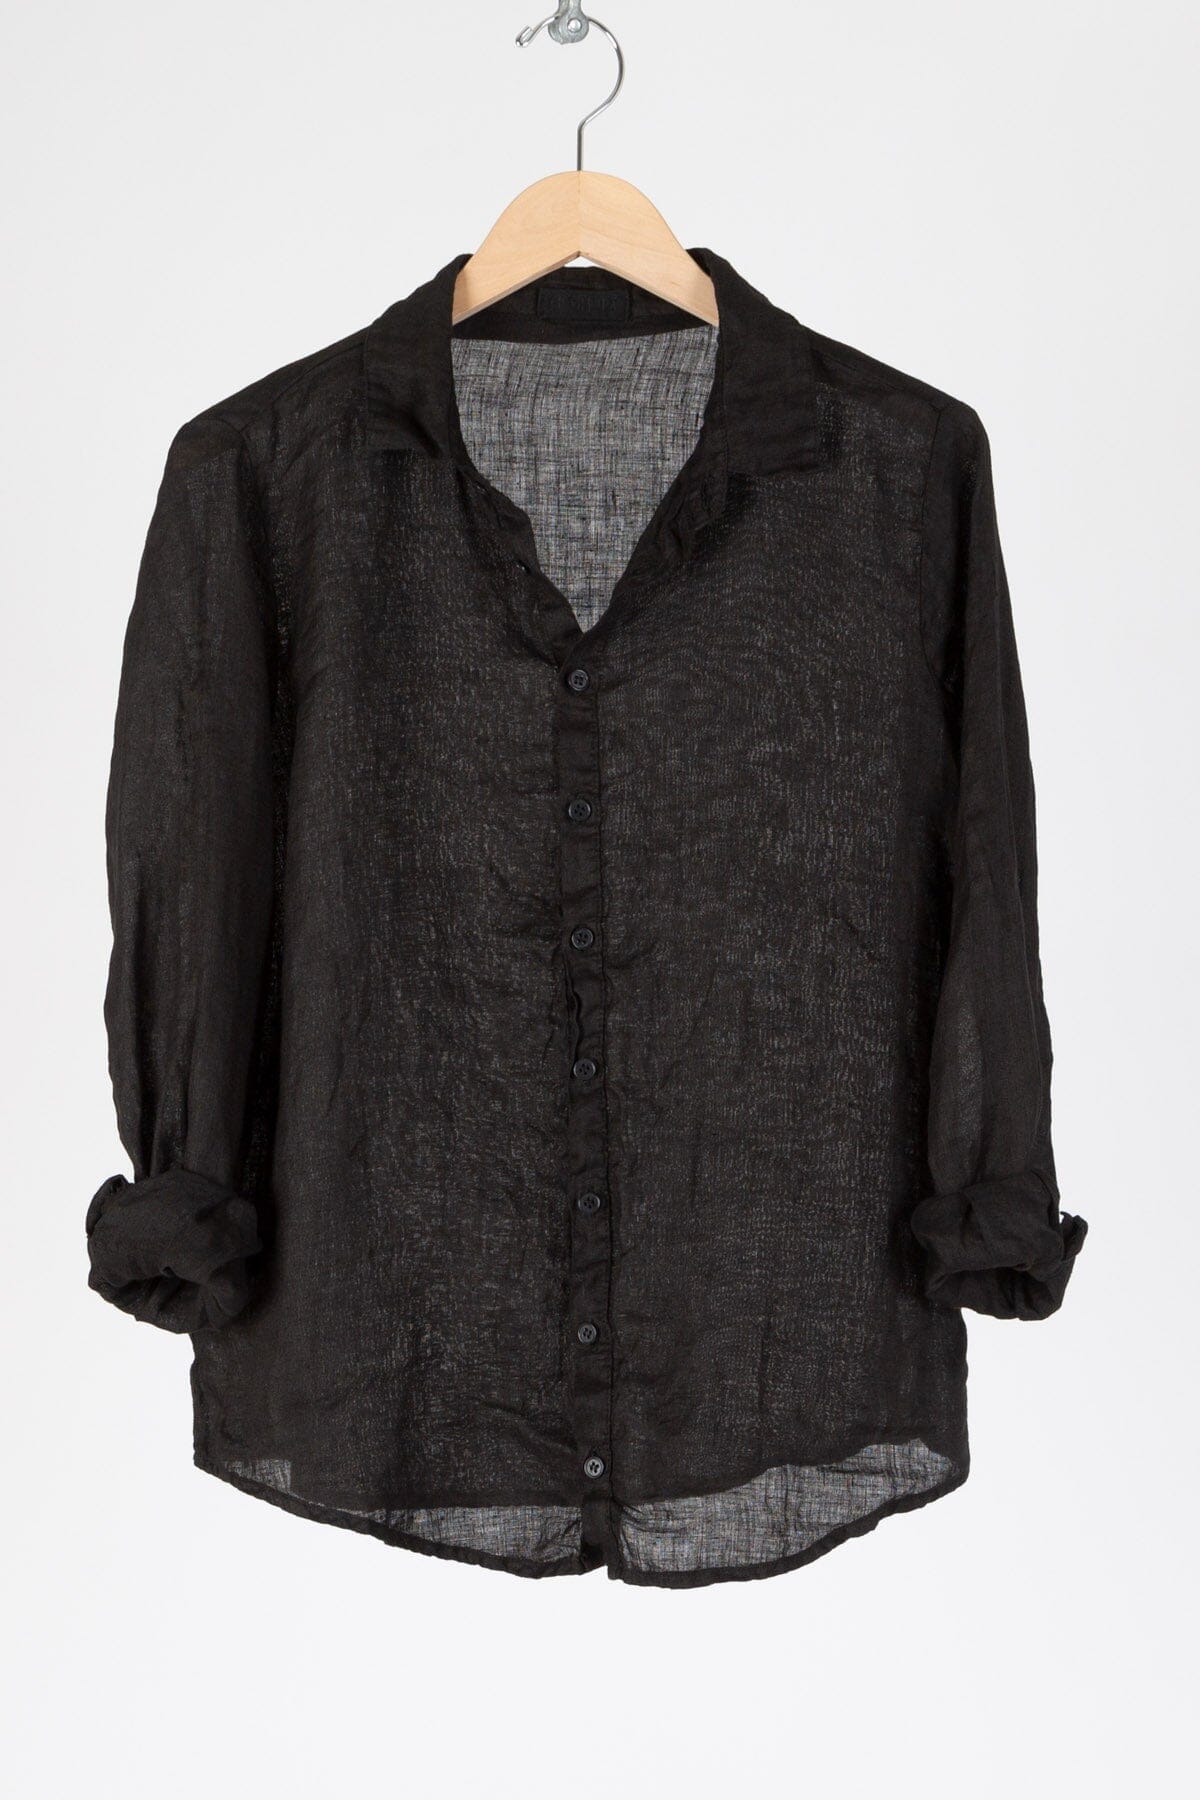 Romy - Linen S10 - Linen Shirt/Top/Tunic CP Shades black